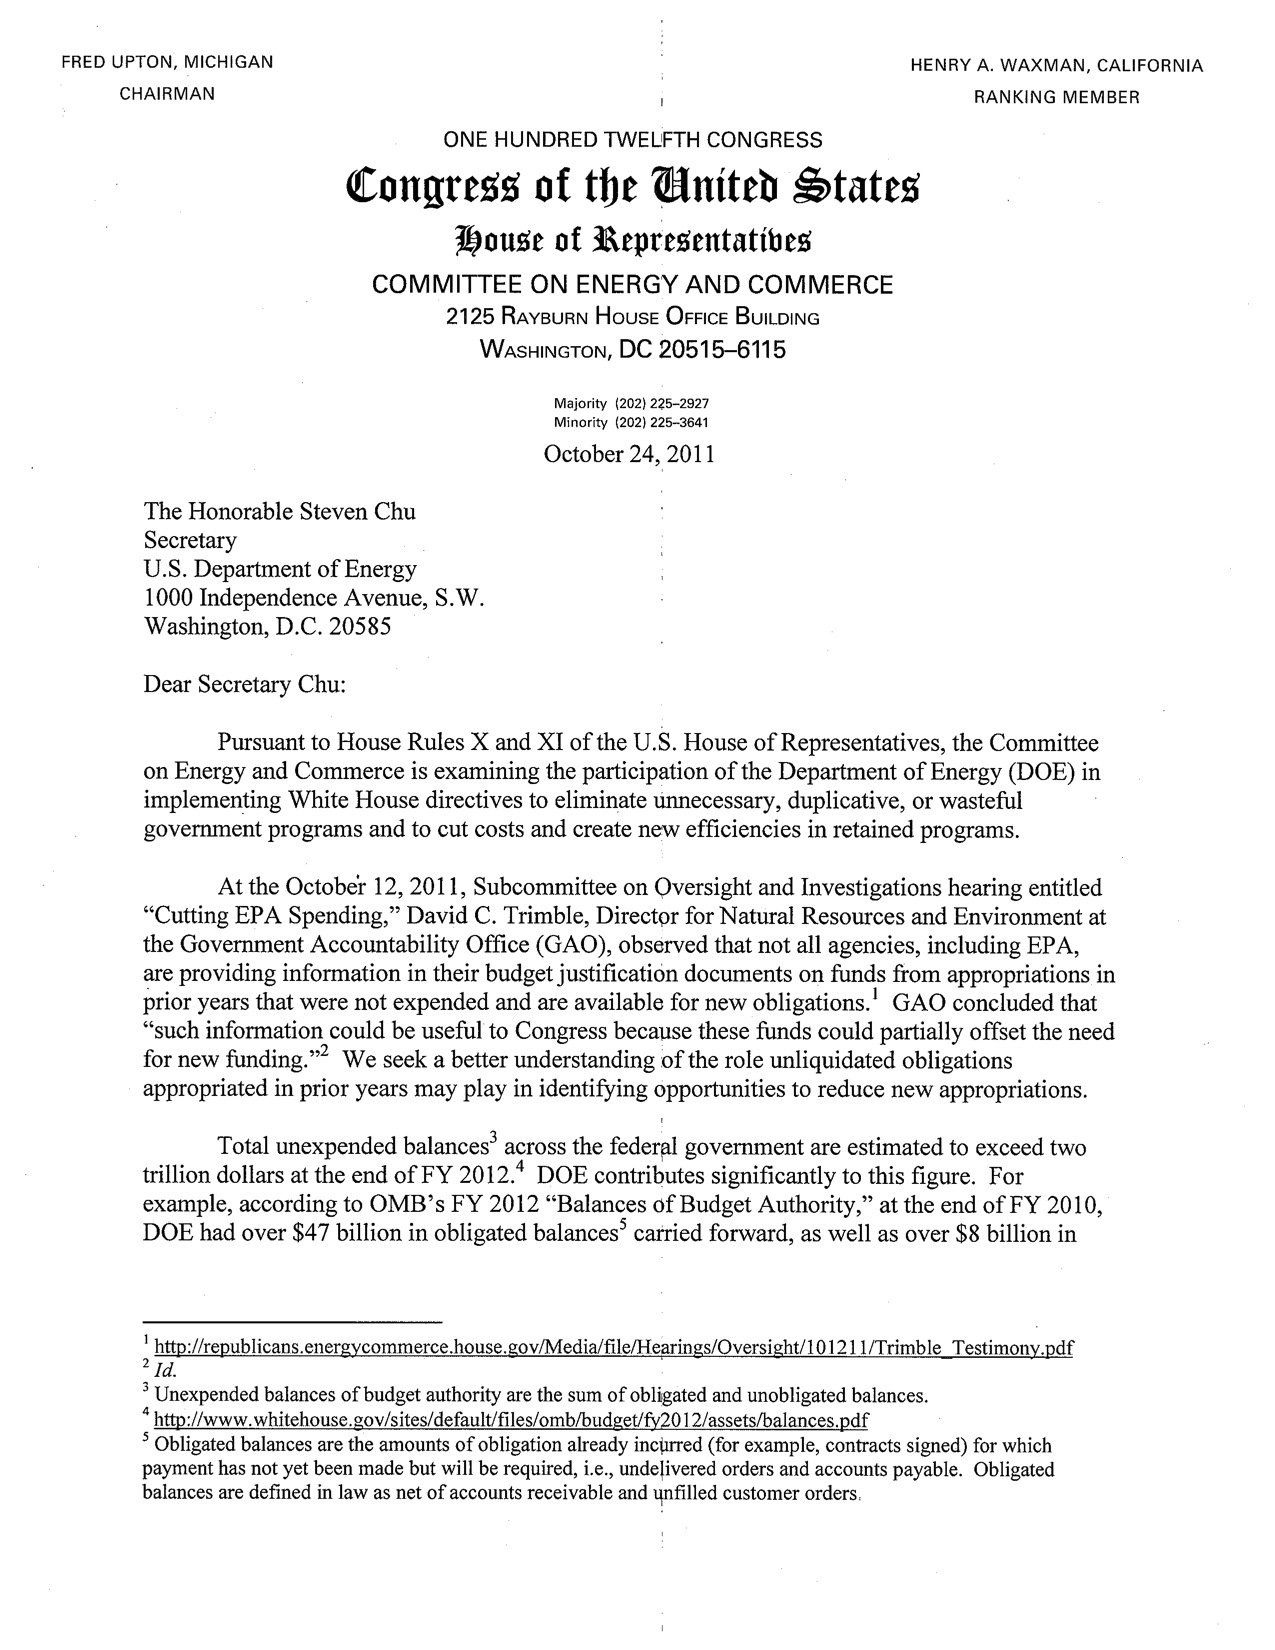 Letter to Secretary Steven Chu, U.S. Department of Energy  U.S. Regarding Letter To Congressman Template